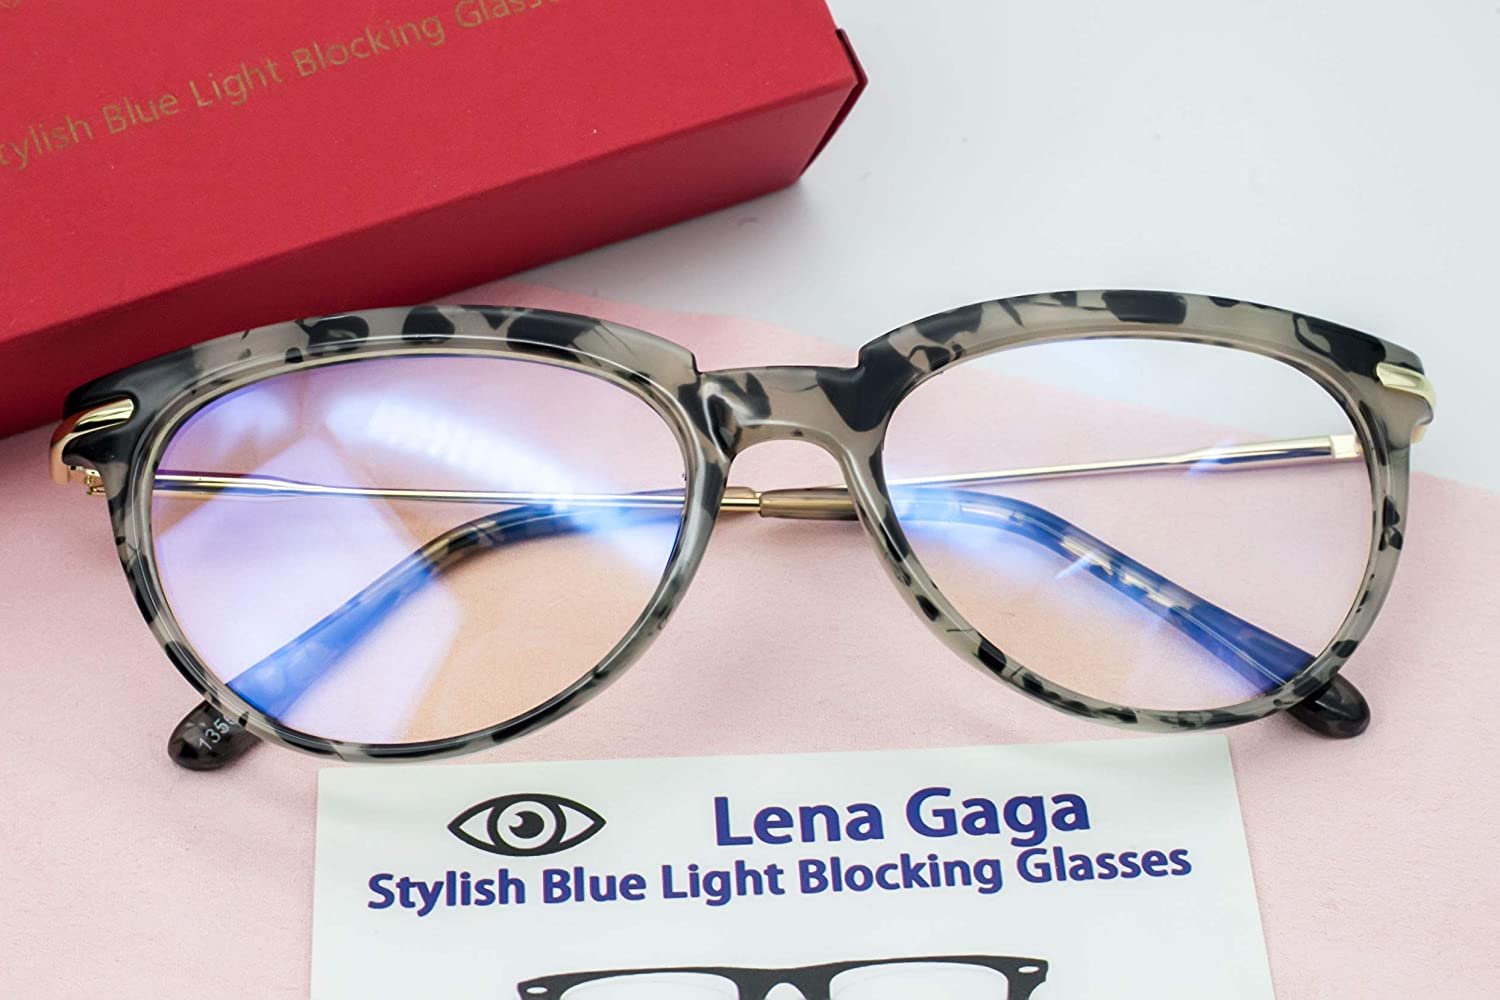 Lena Gaga Blue Light Blocking Glasses.